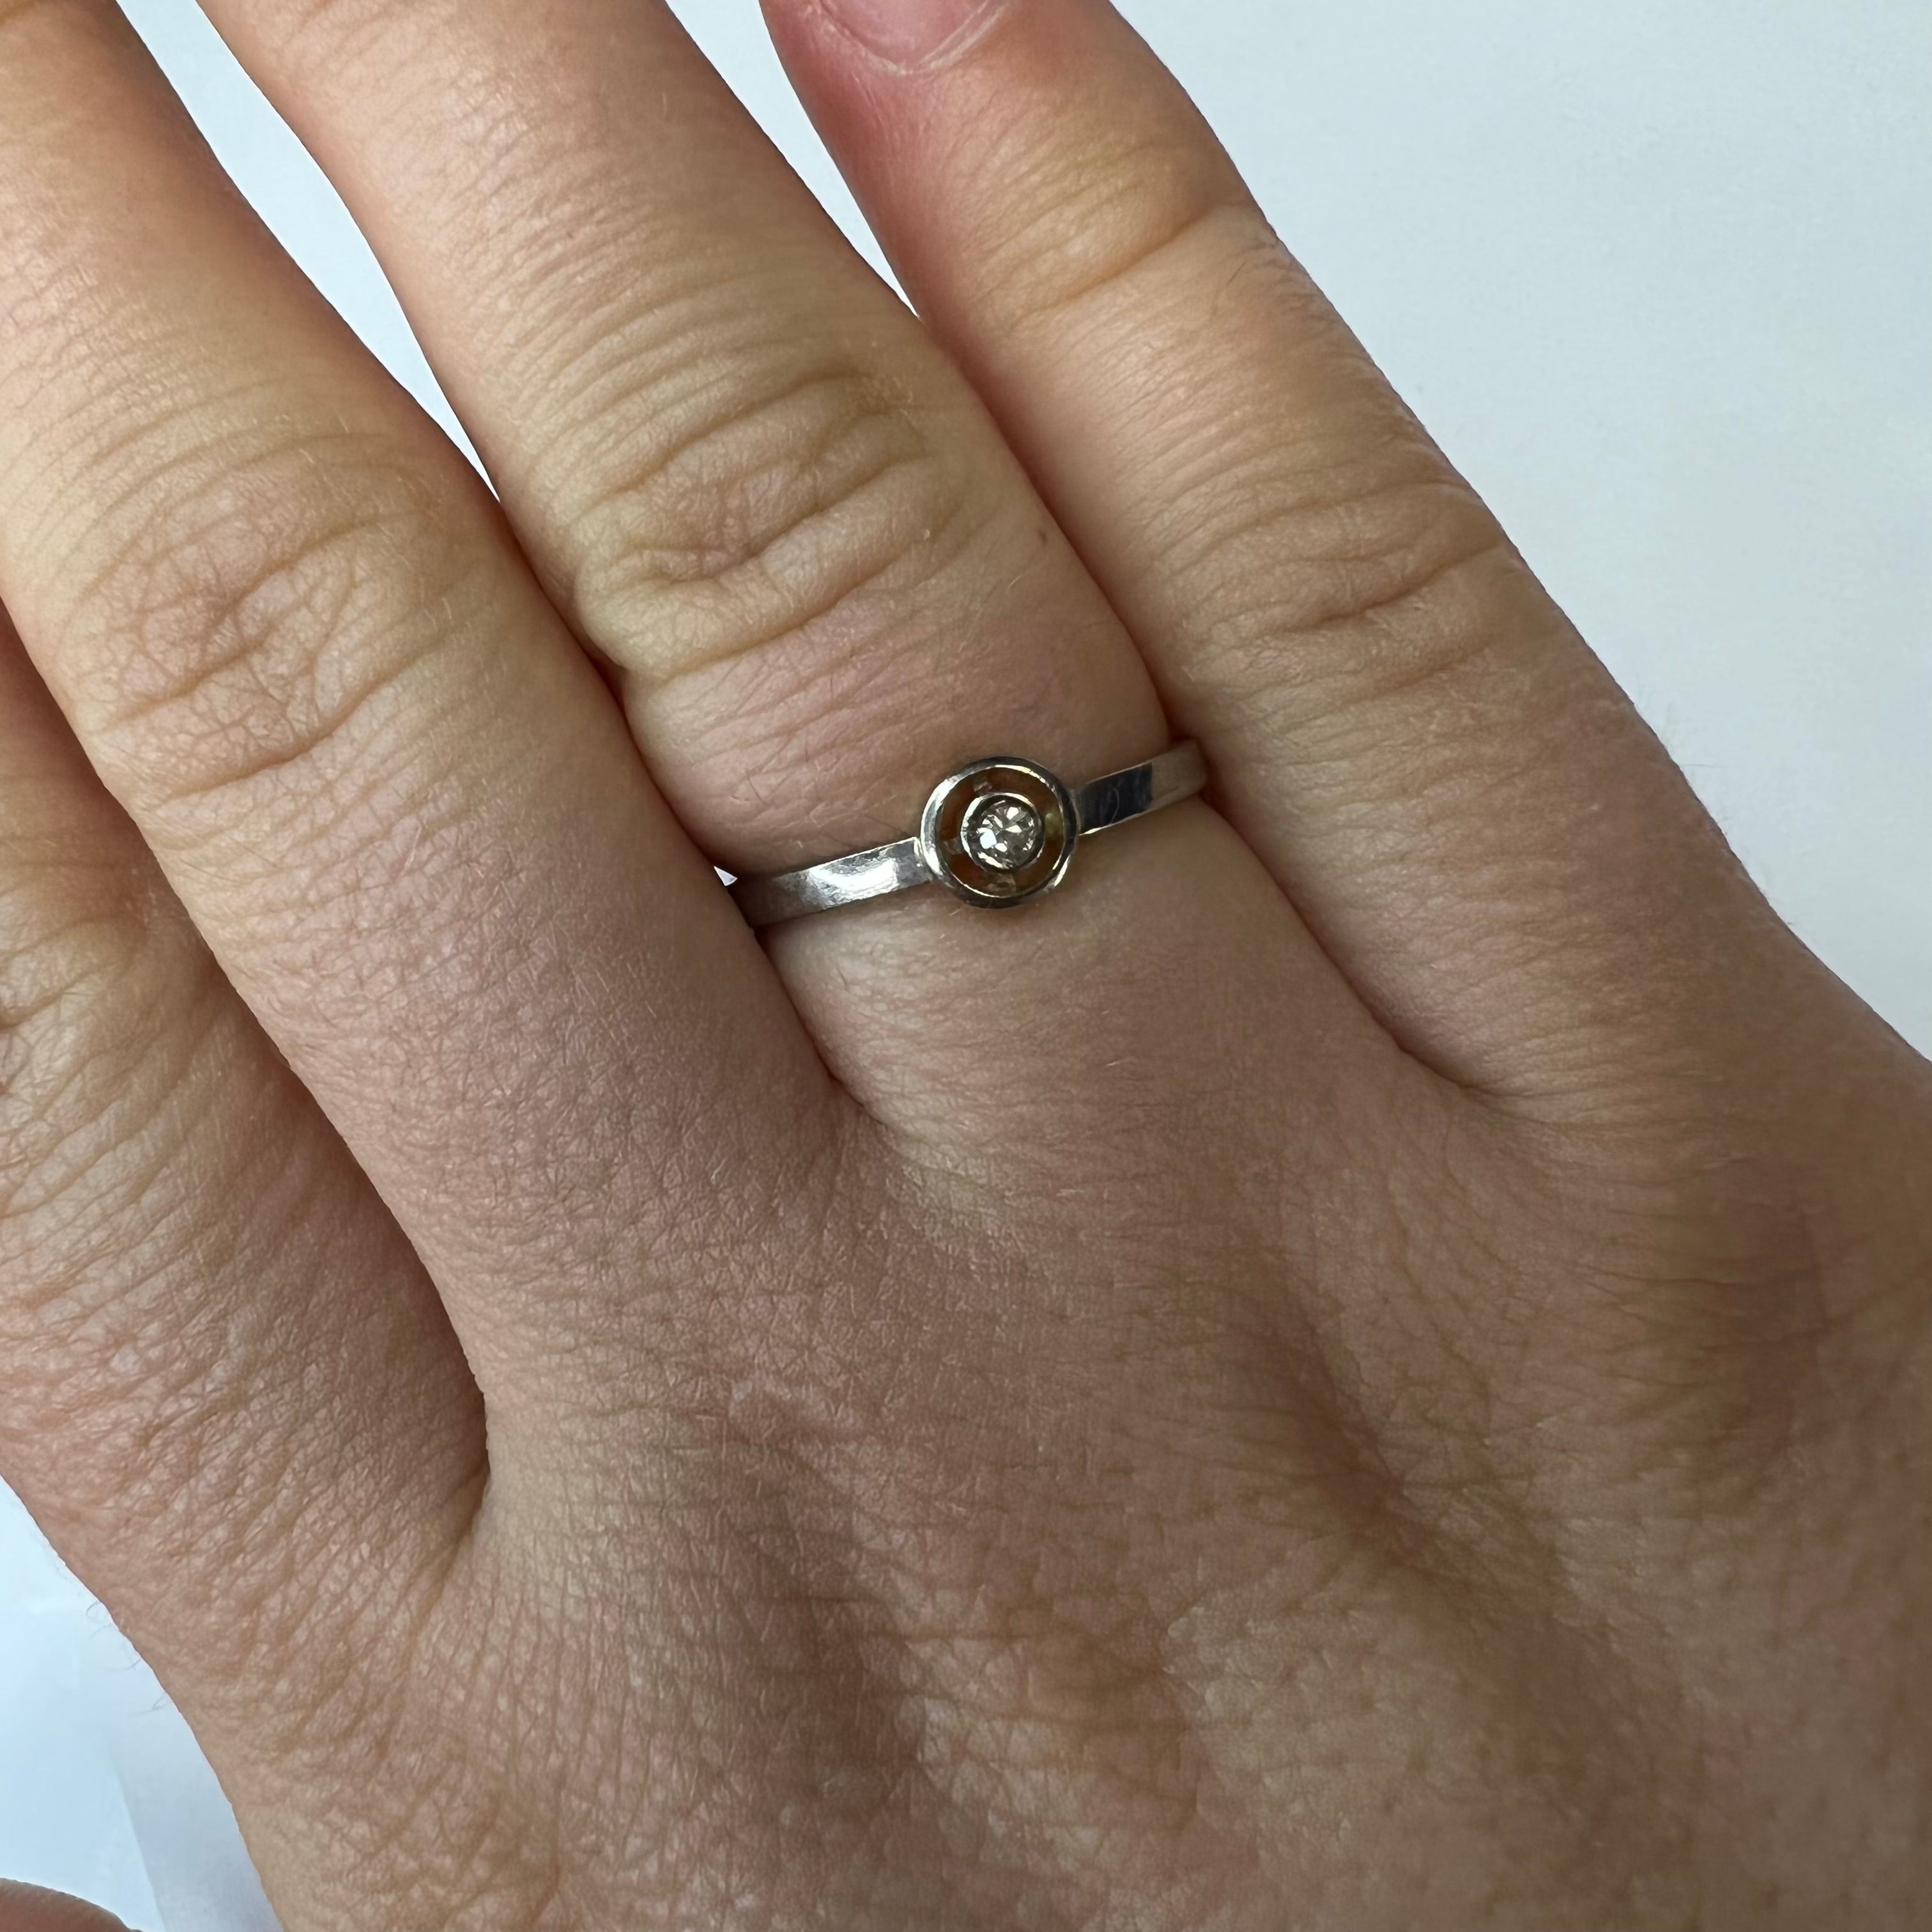 Solid 18K White Gold Bezel Diamond Engagement Ring Band Size 7.5